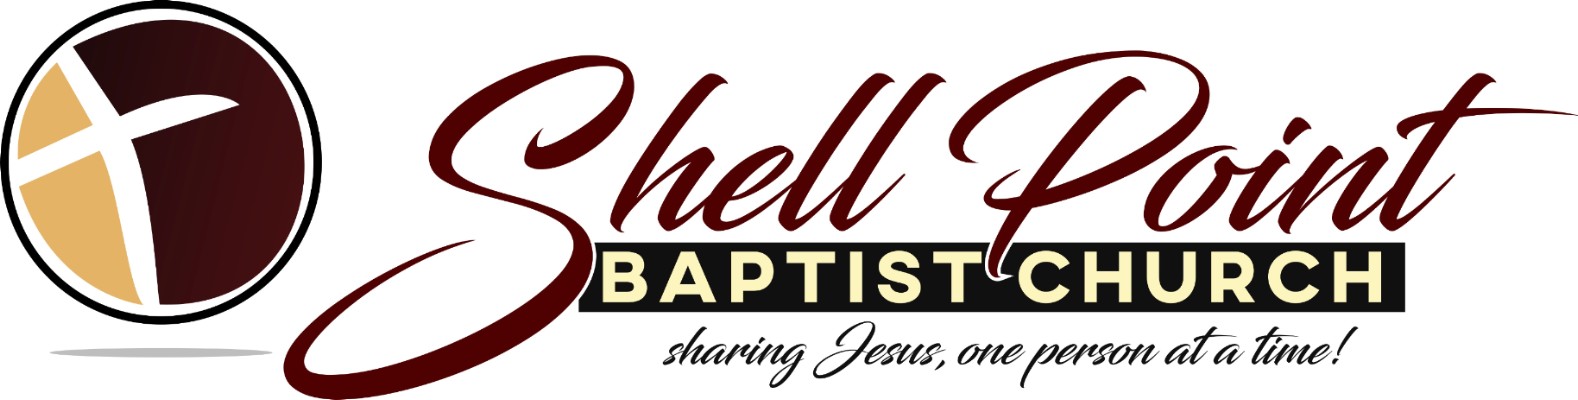 Shell Point Baptist Church - Beaufort, S.C. Logo